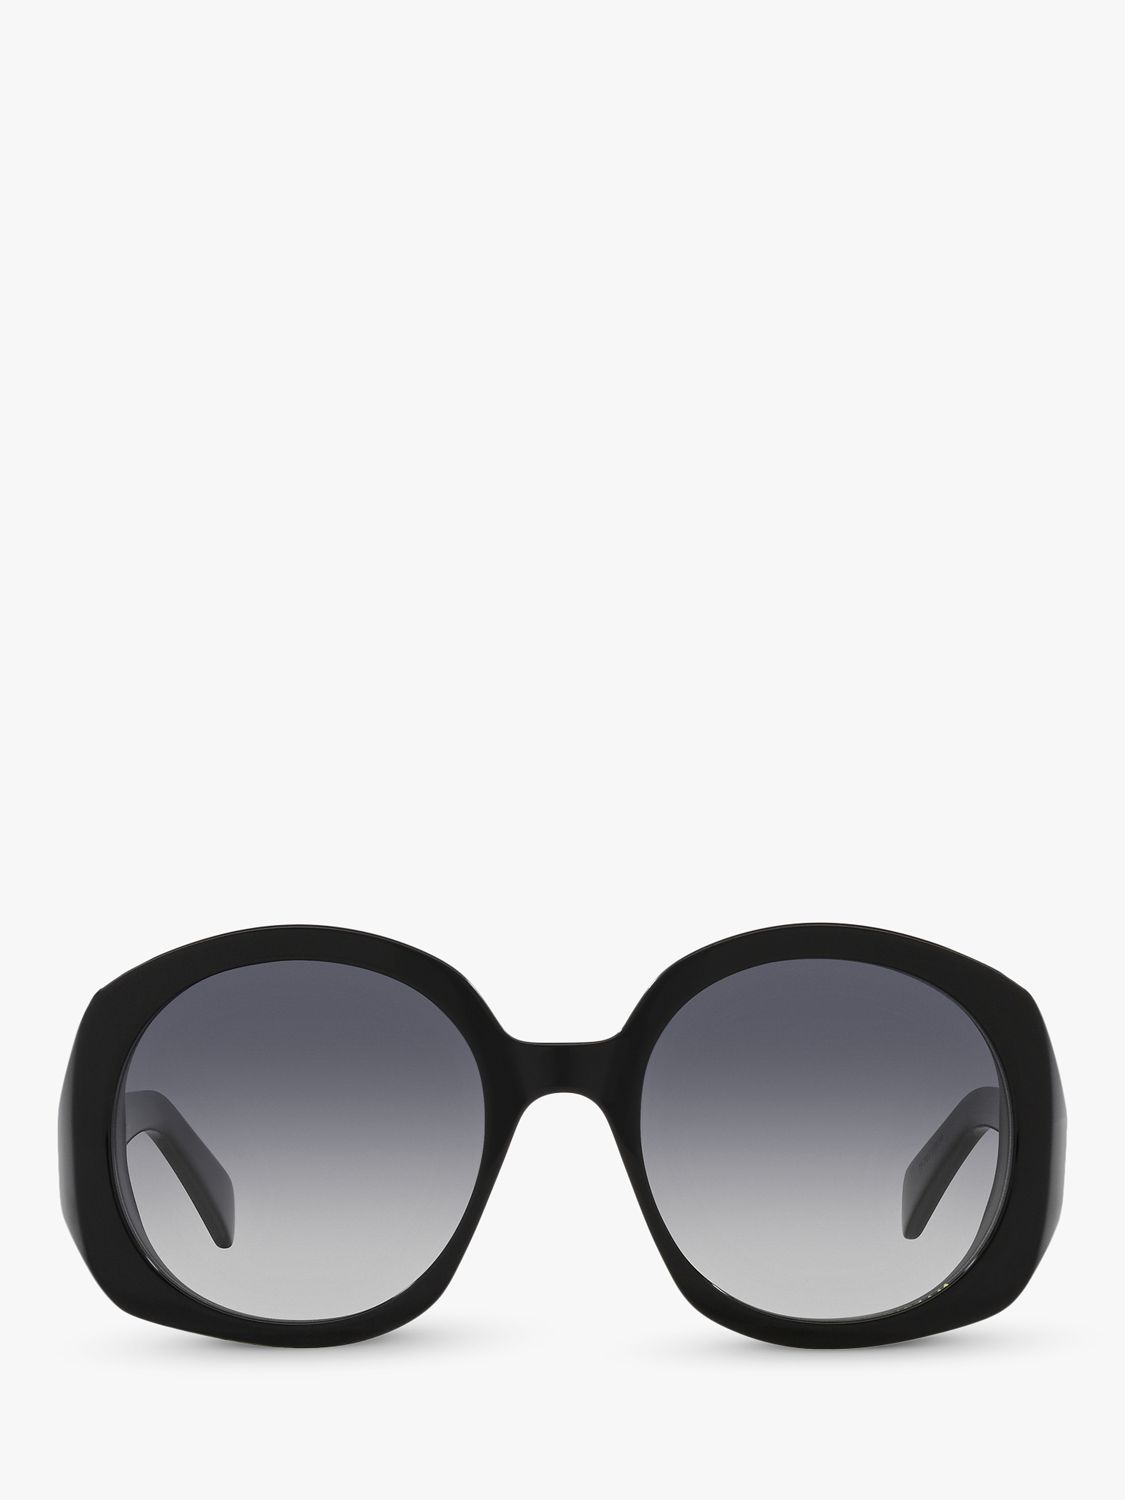 Celine CL000378 Women's Round Sunglasses, Black